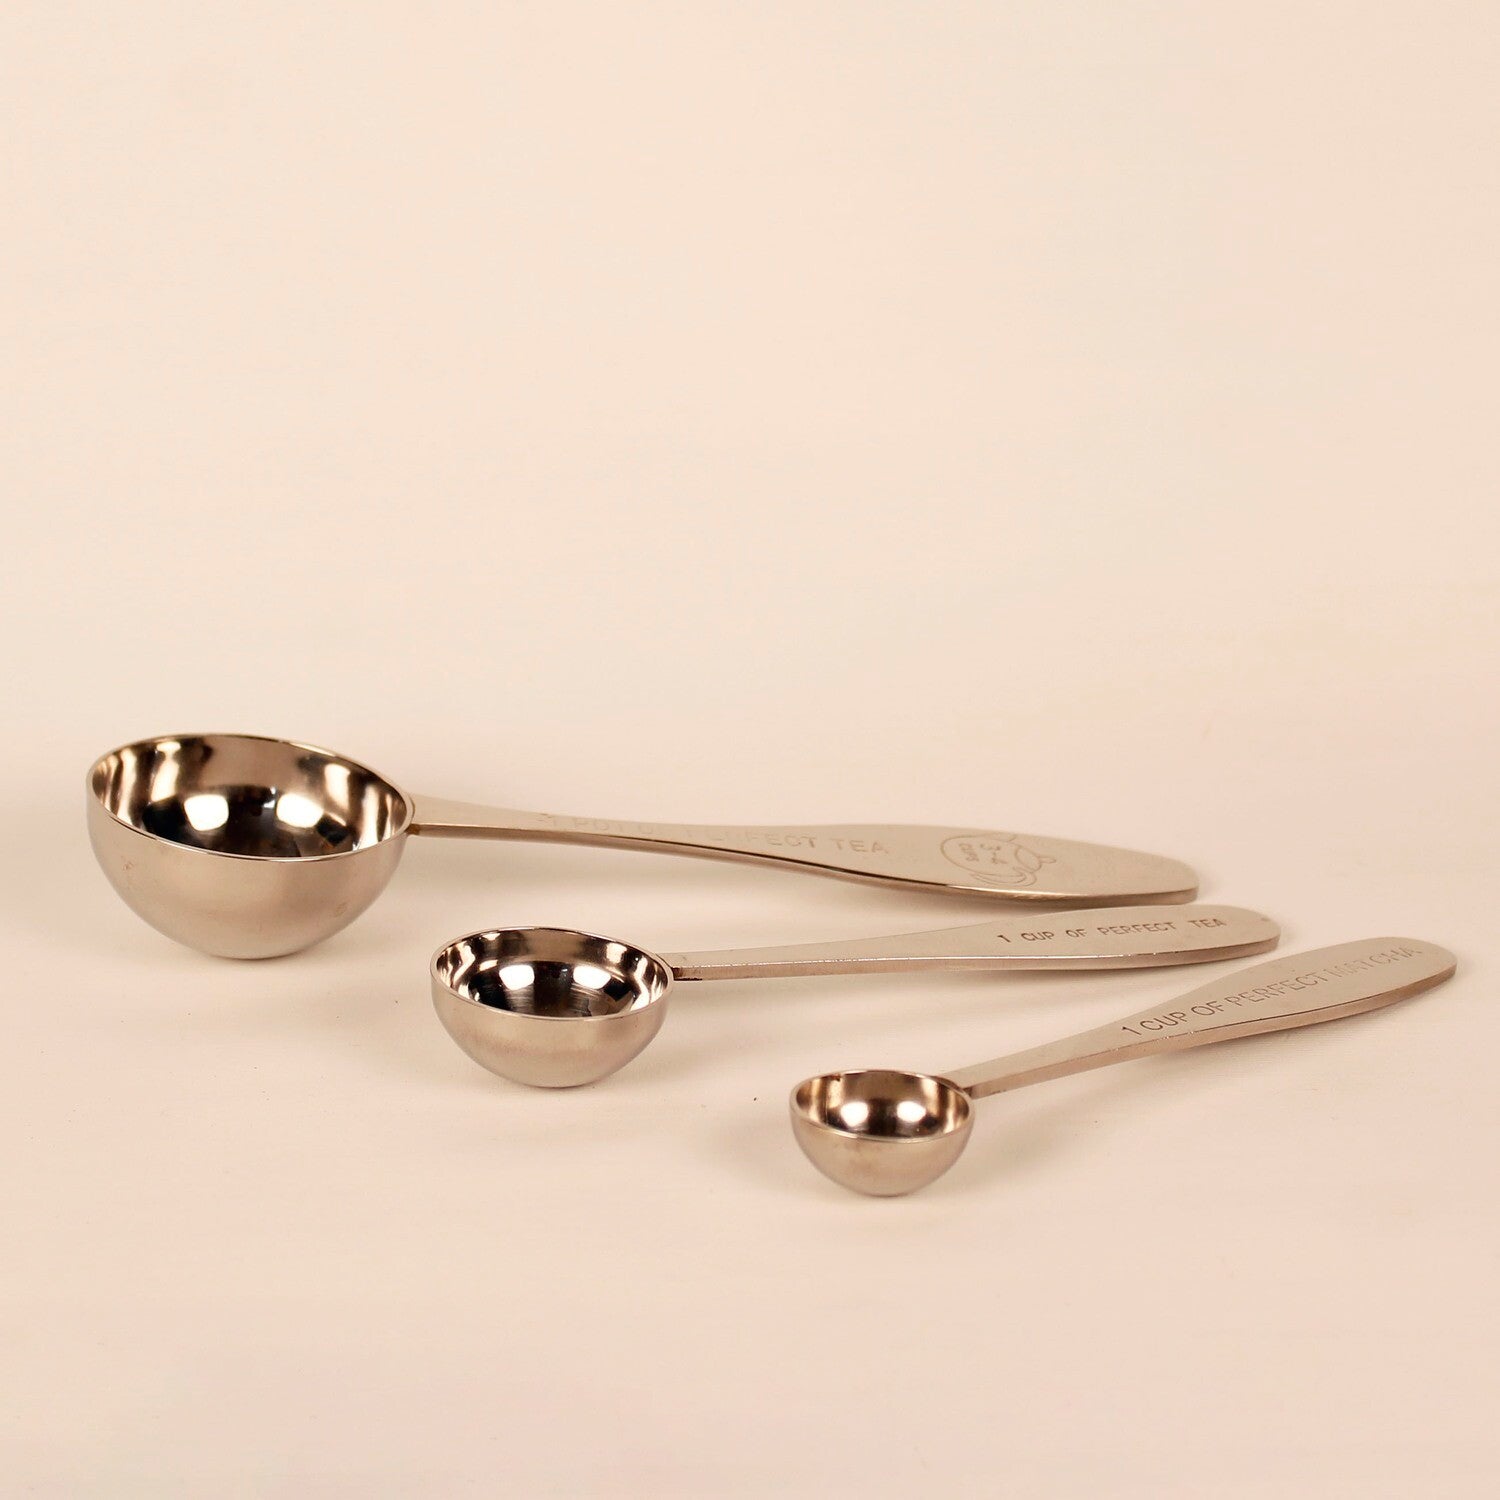 Perfect metal measuring spoon